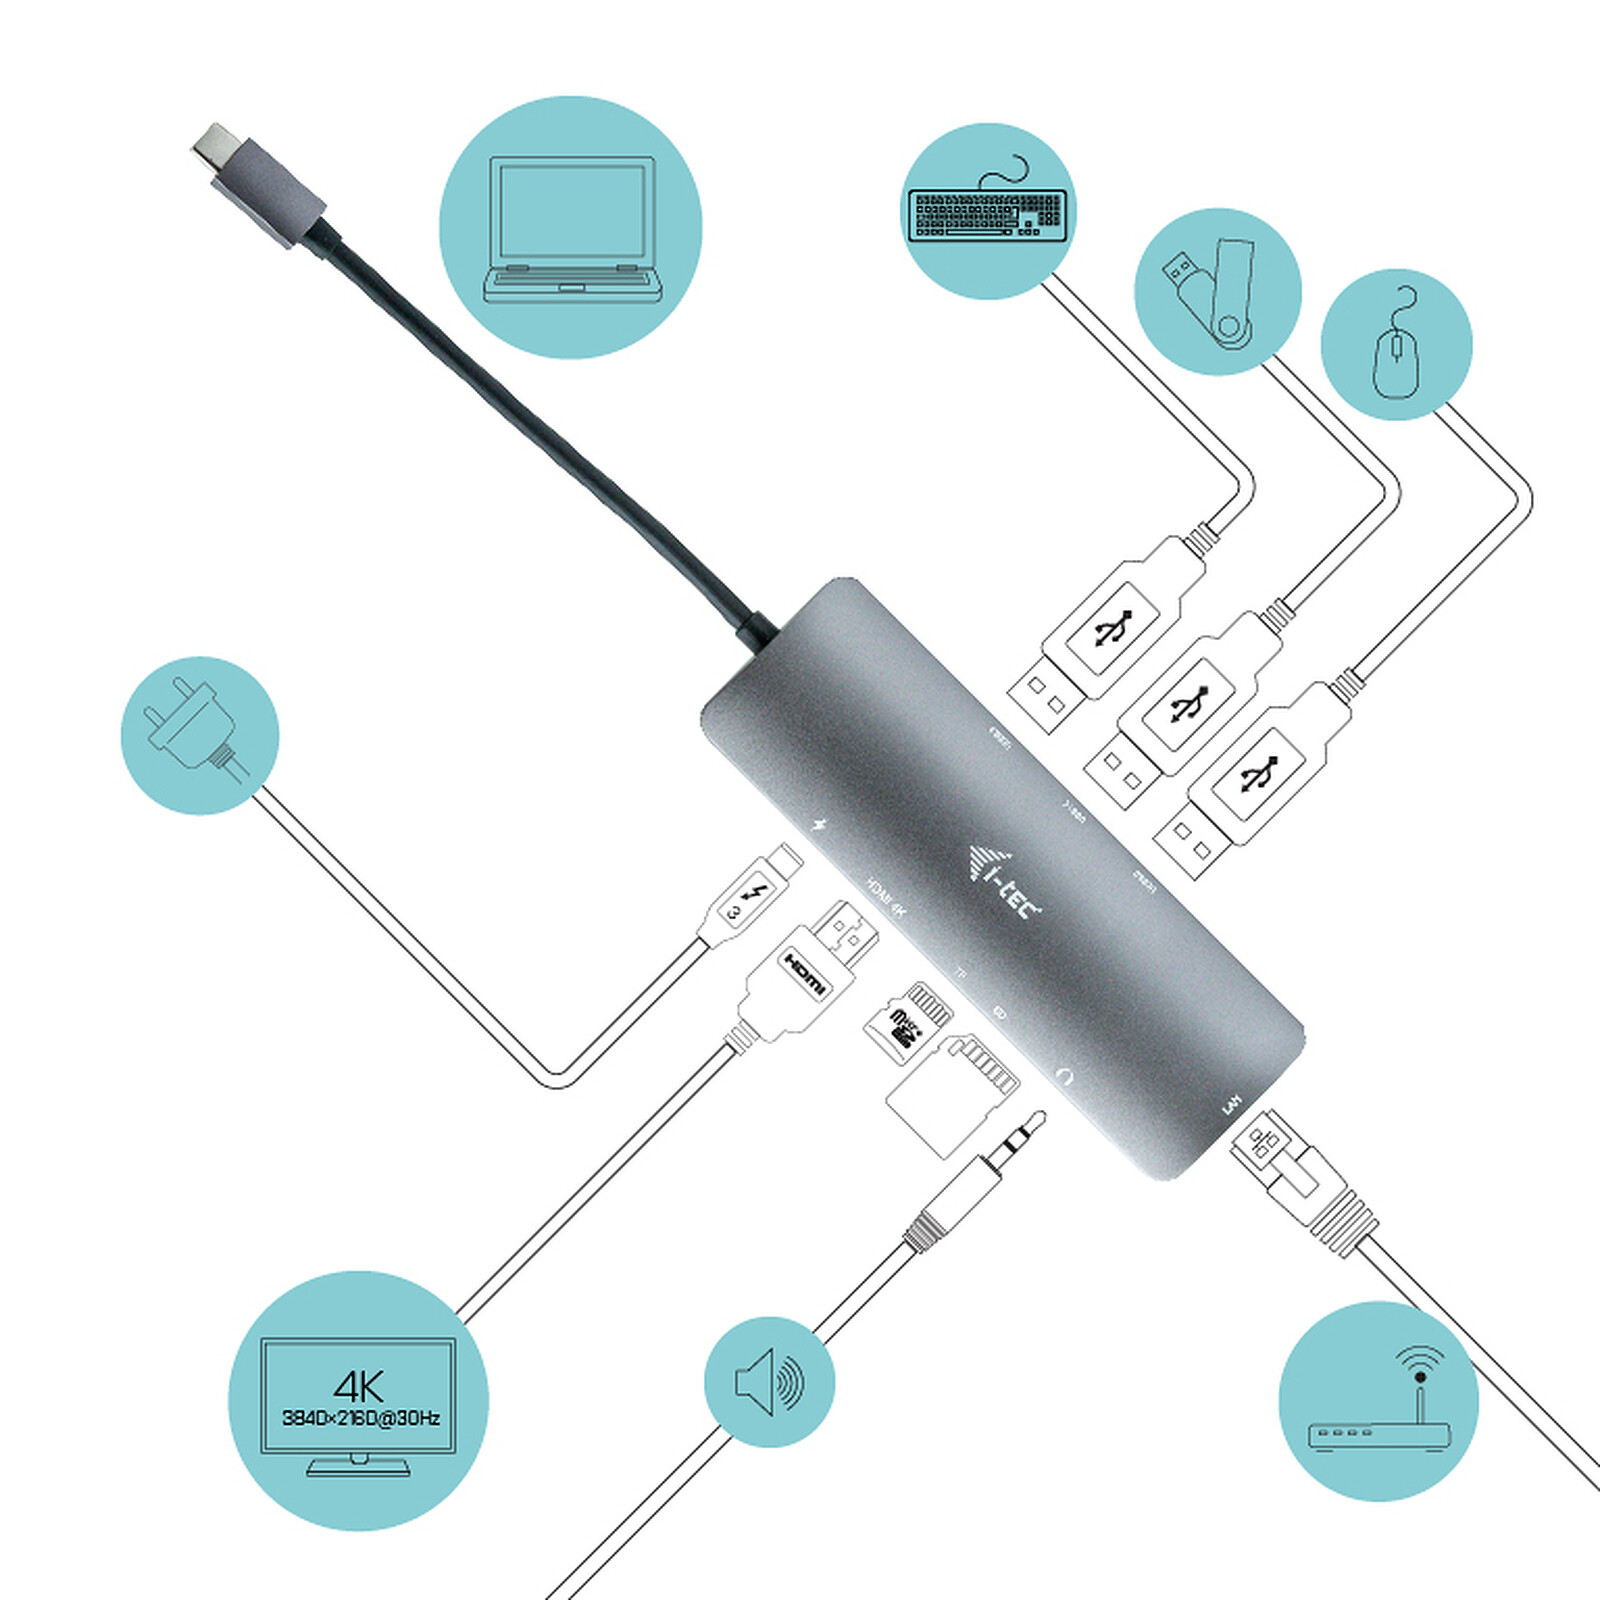 i-tec USB-C 4K Station dAccueil pour Voyager 1x HDMI 1x GLAN Ethernet 2x USB 3.0 1x USB-C 1x USB-C Power Delivery/Data pour Windows MacOS Android ChromeOS Thunderbolt 3 Compatible 